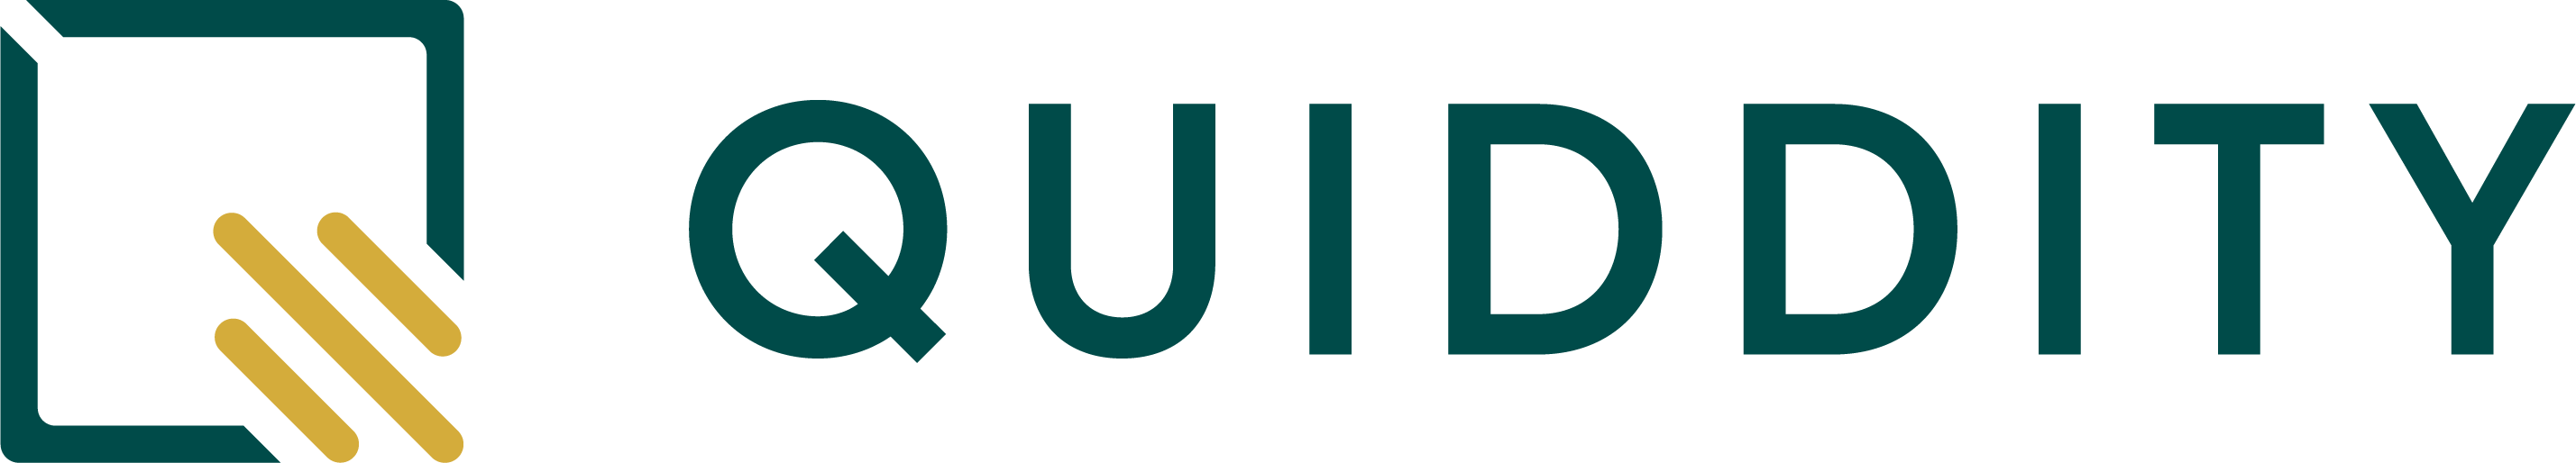 Logo_Quiddity_Full Color_Horizontal